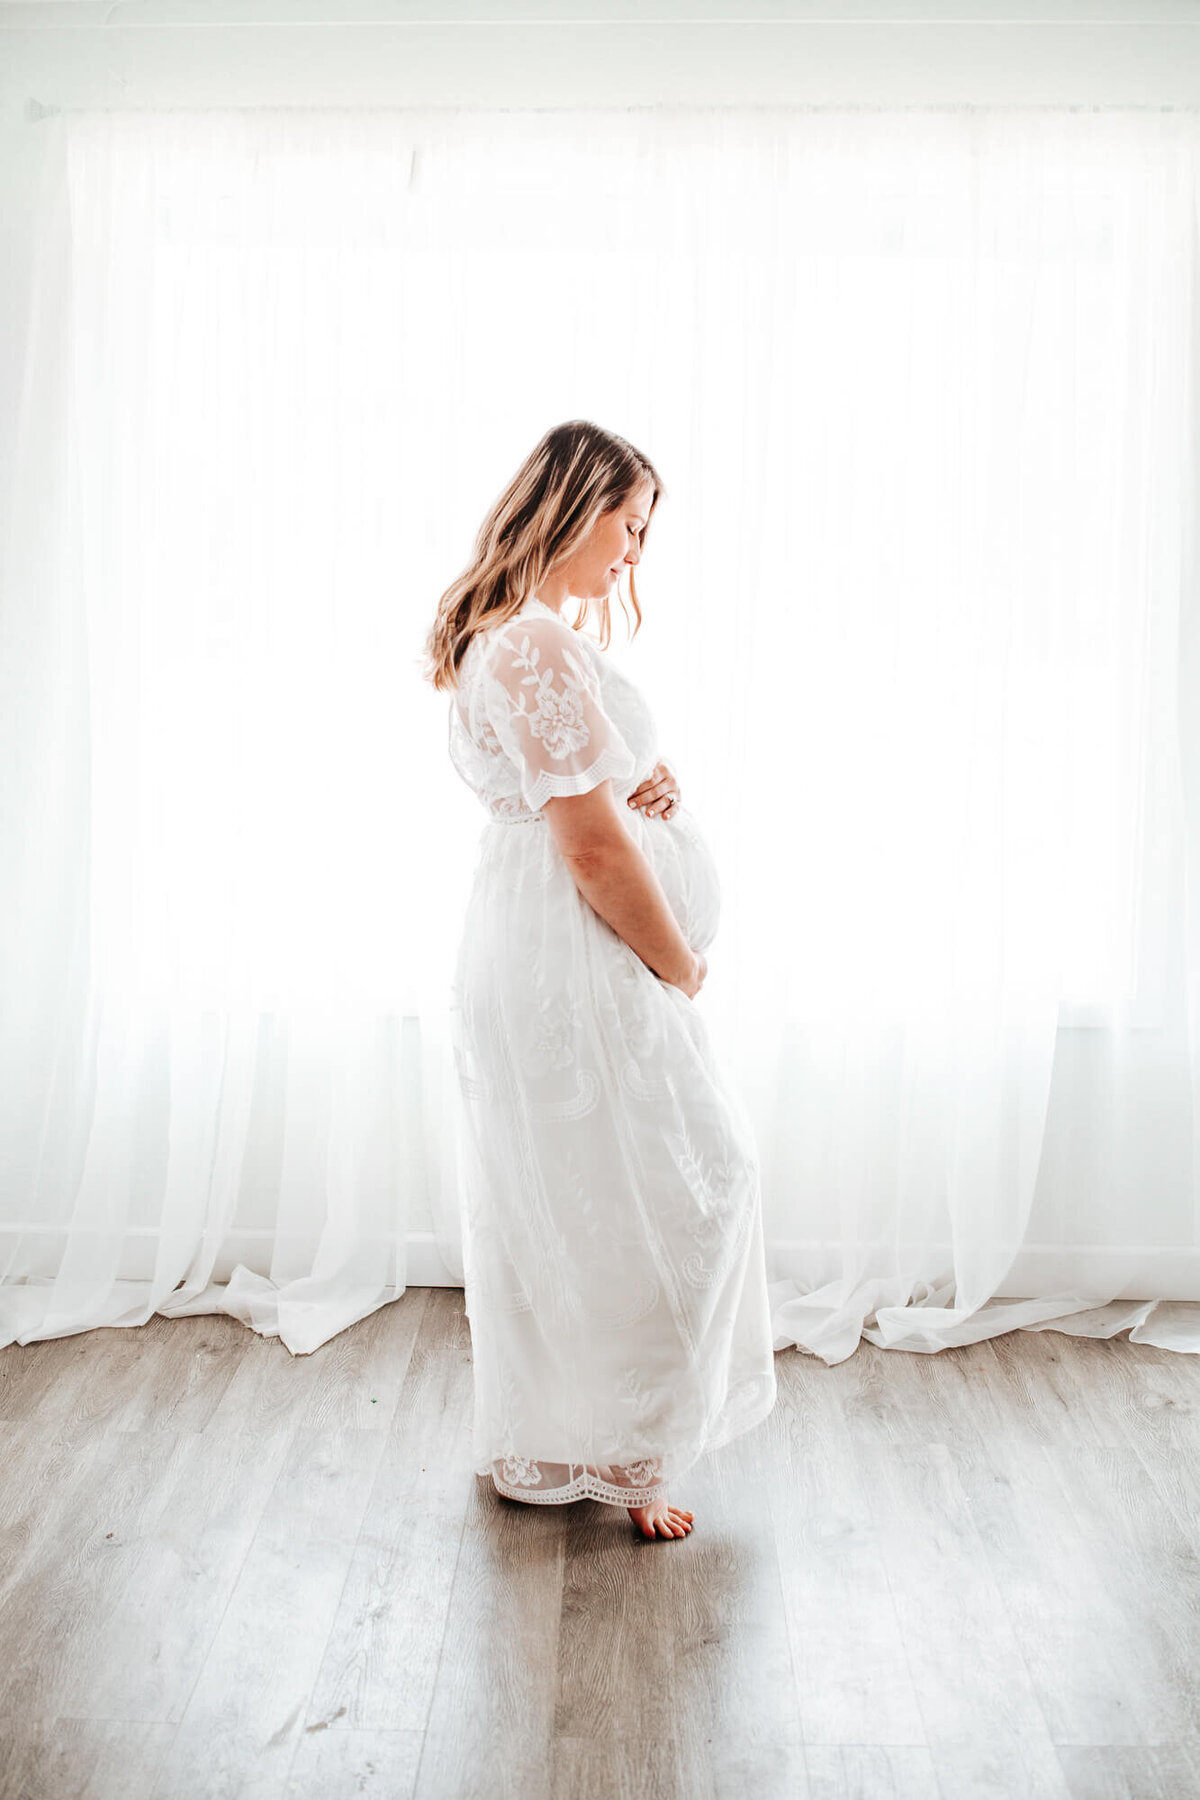 Houston Maternity Photography Studio